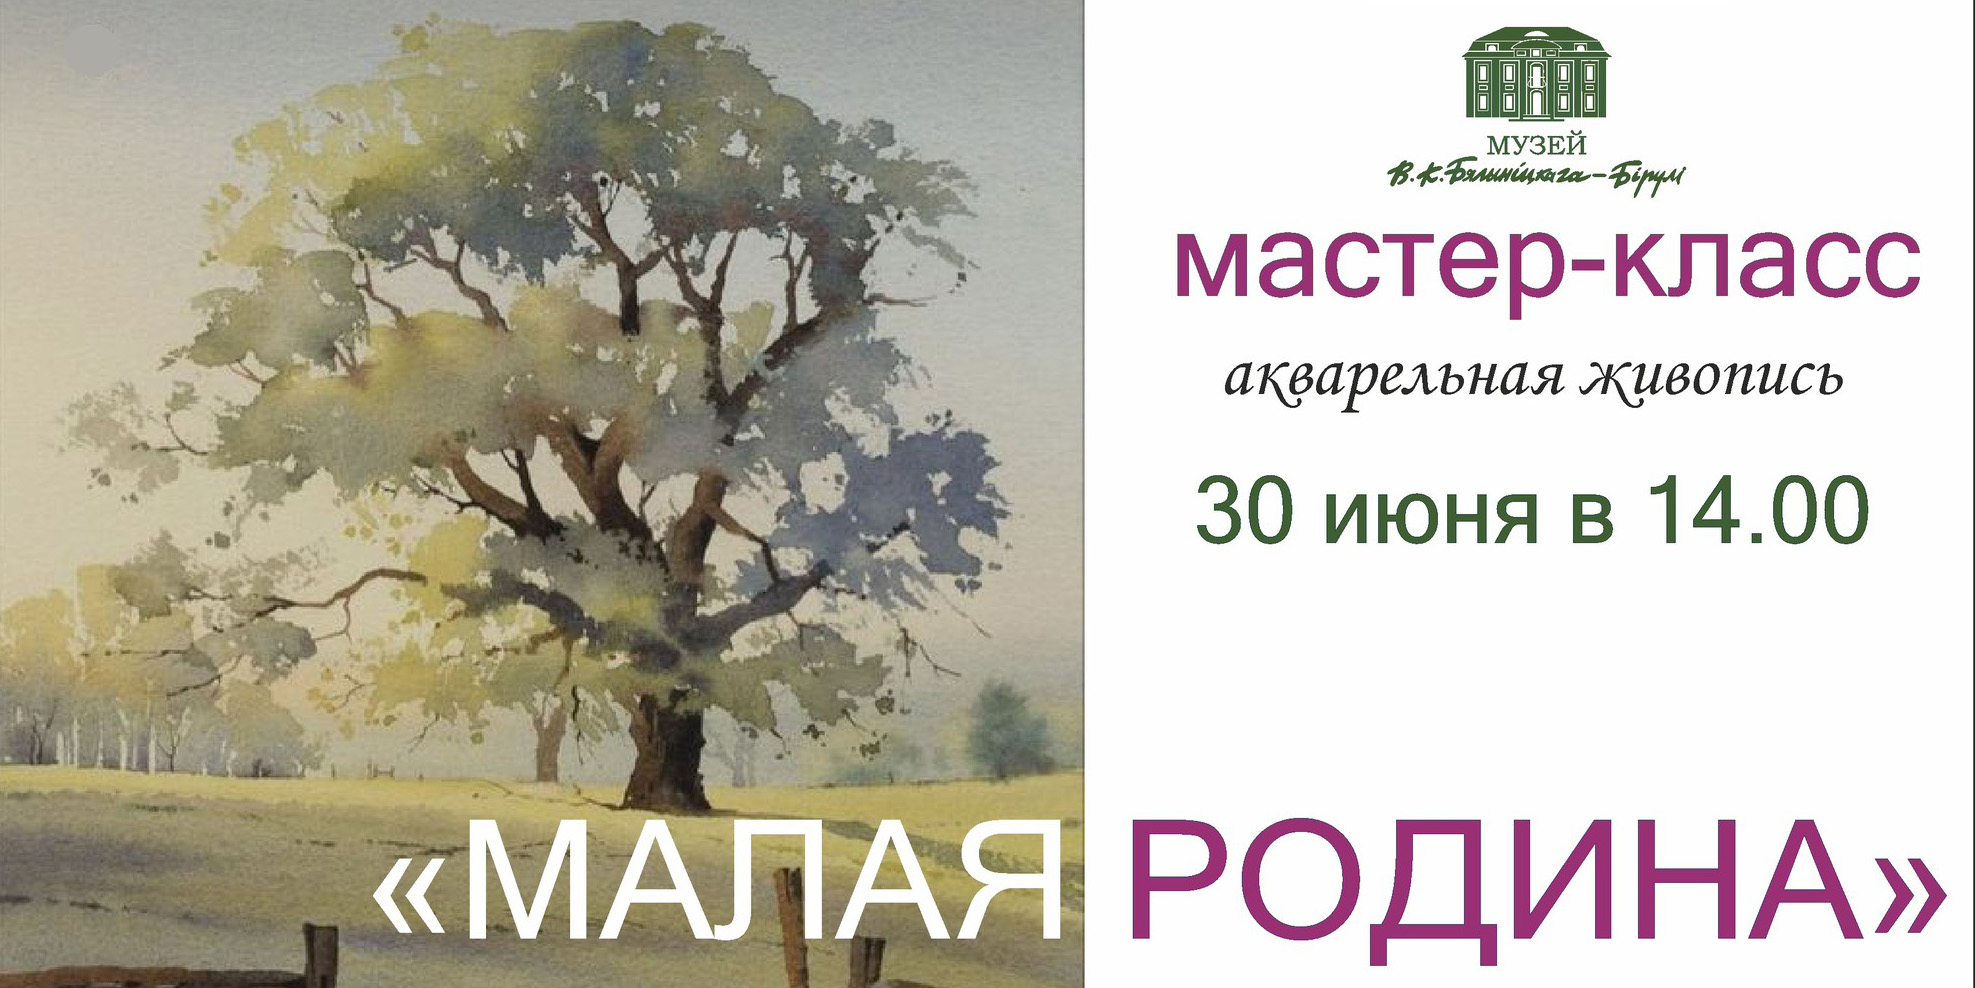 Могилевчан приглашают на мастер-класс по акварельной живописи 30 июня